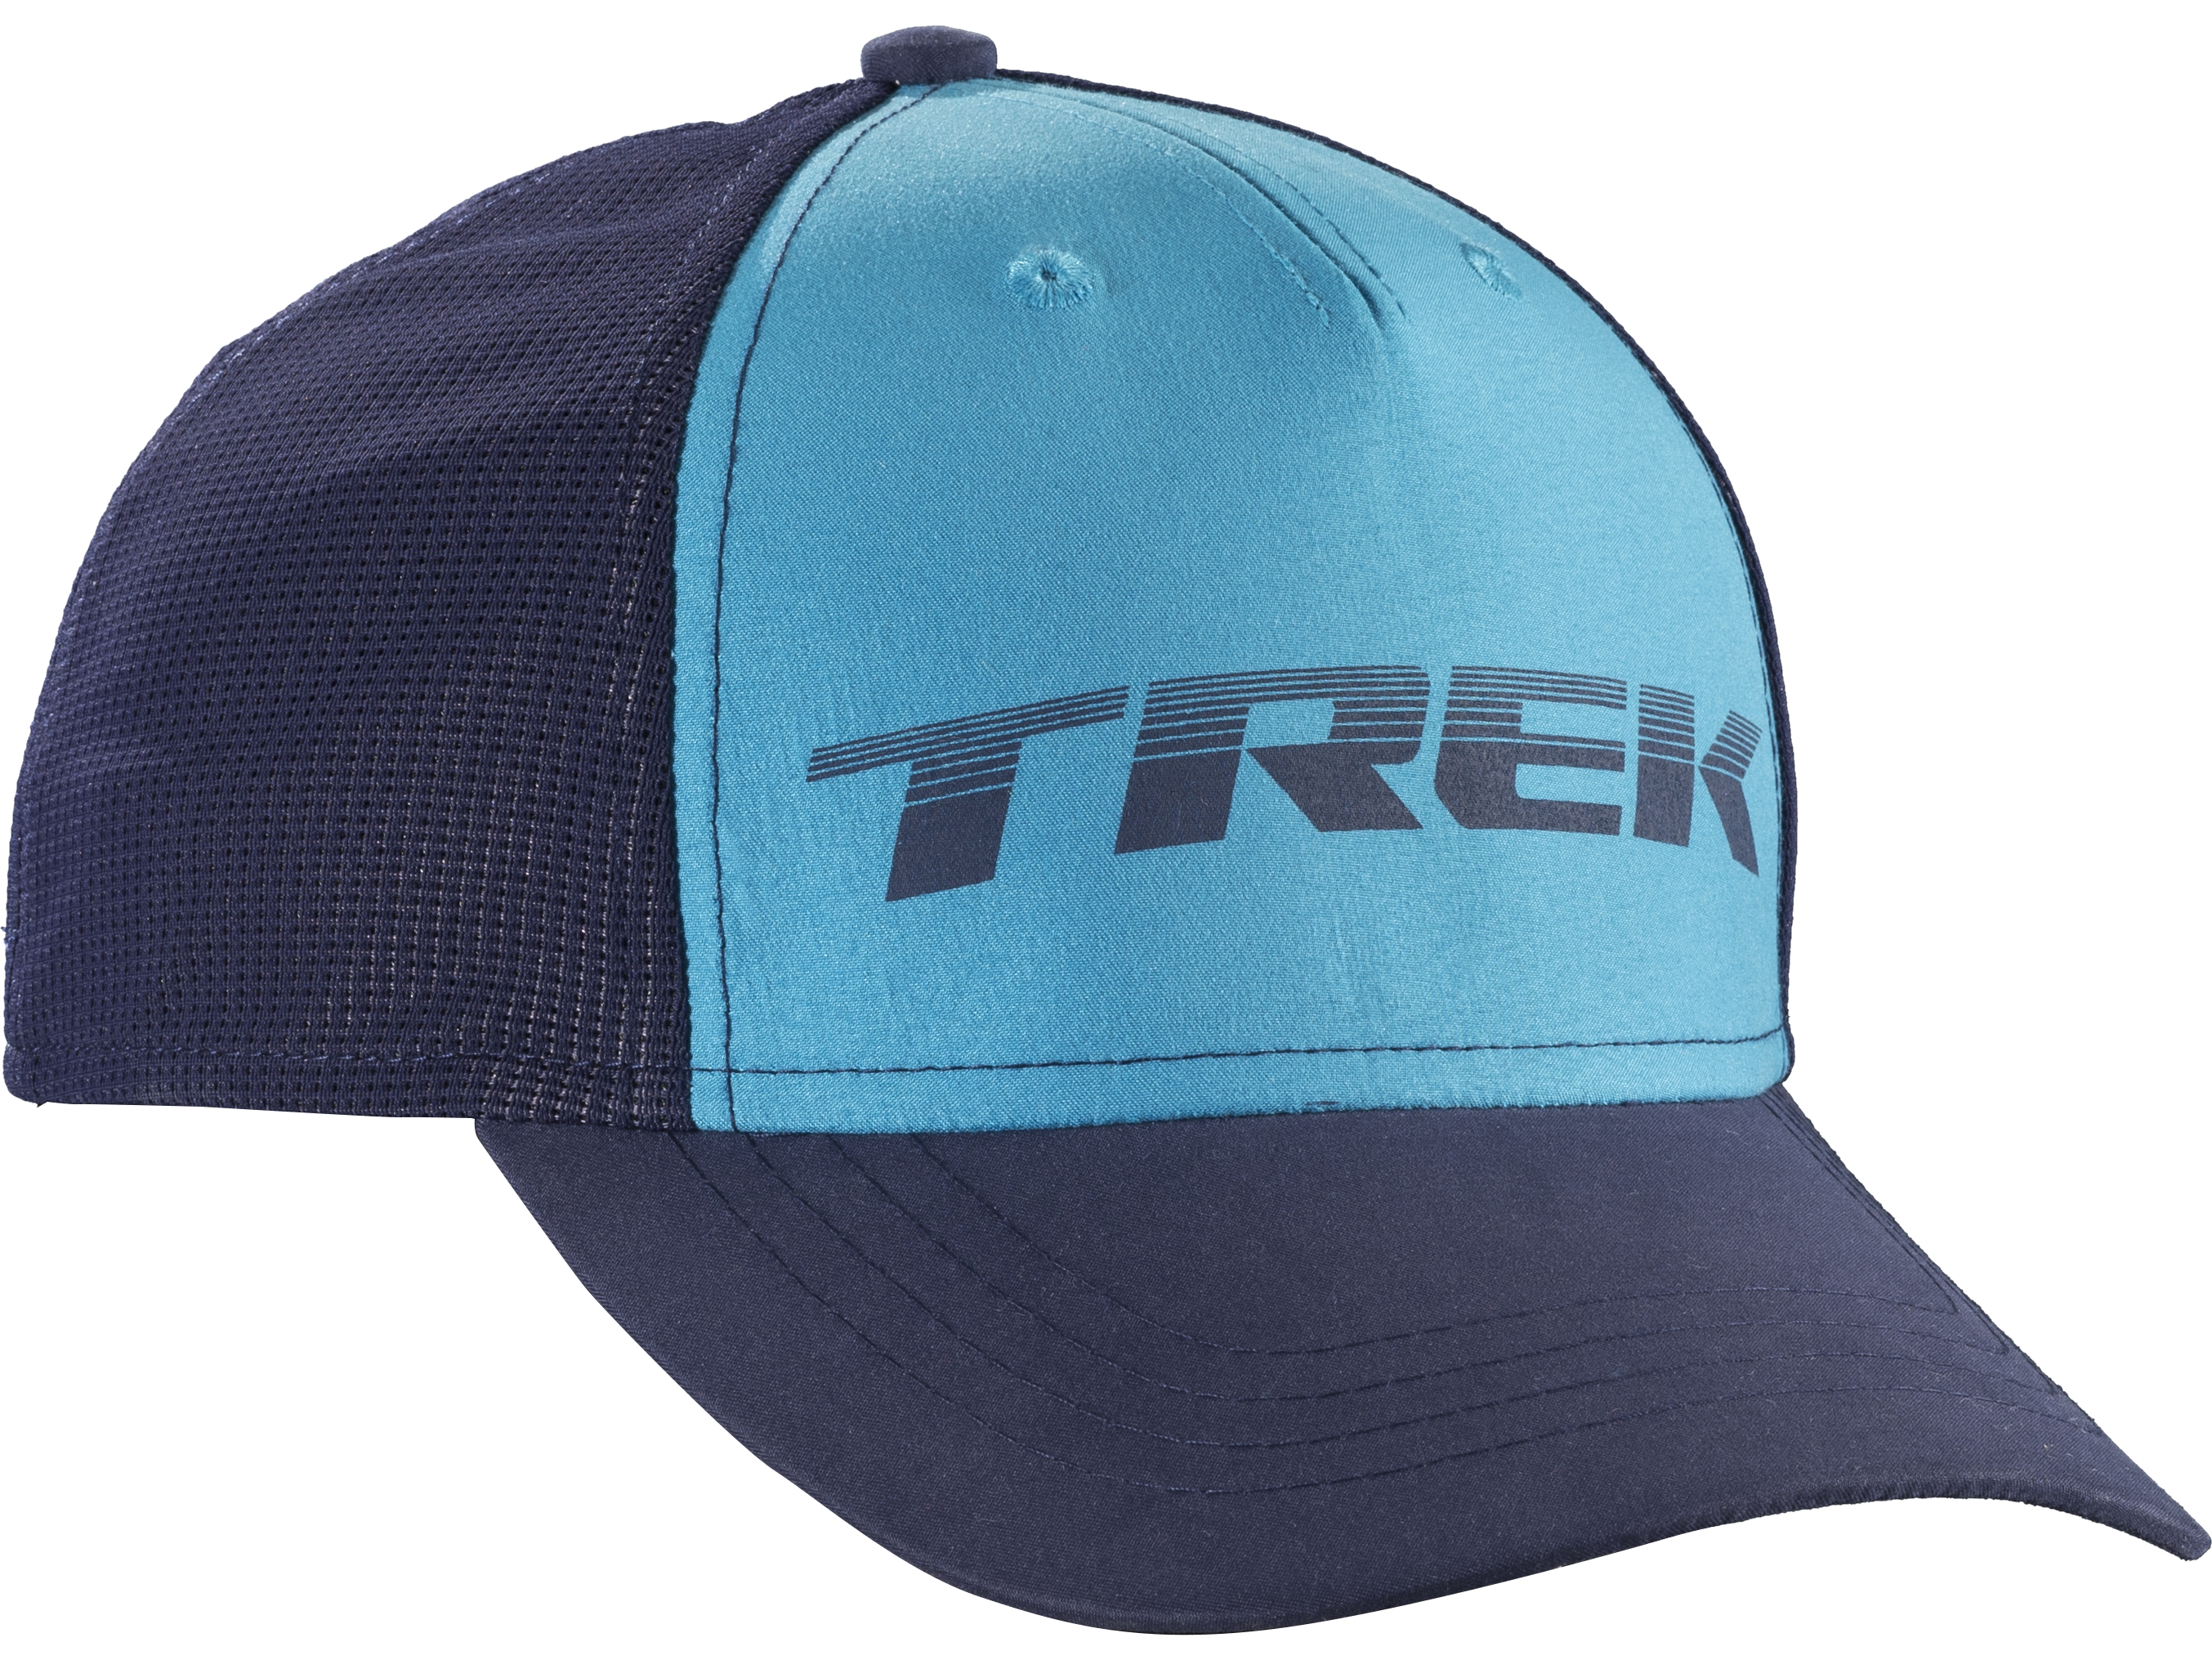 trek bikes hat